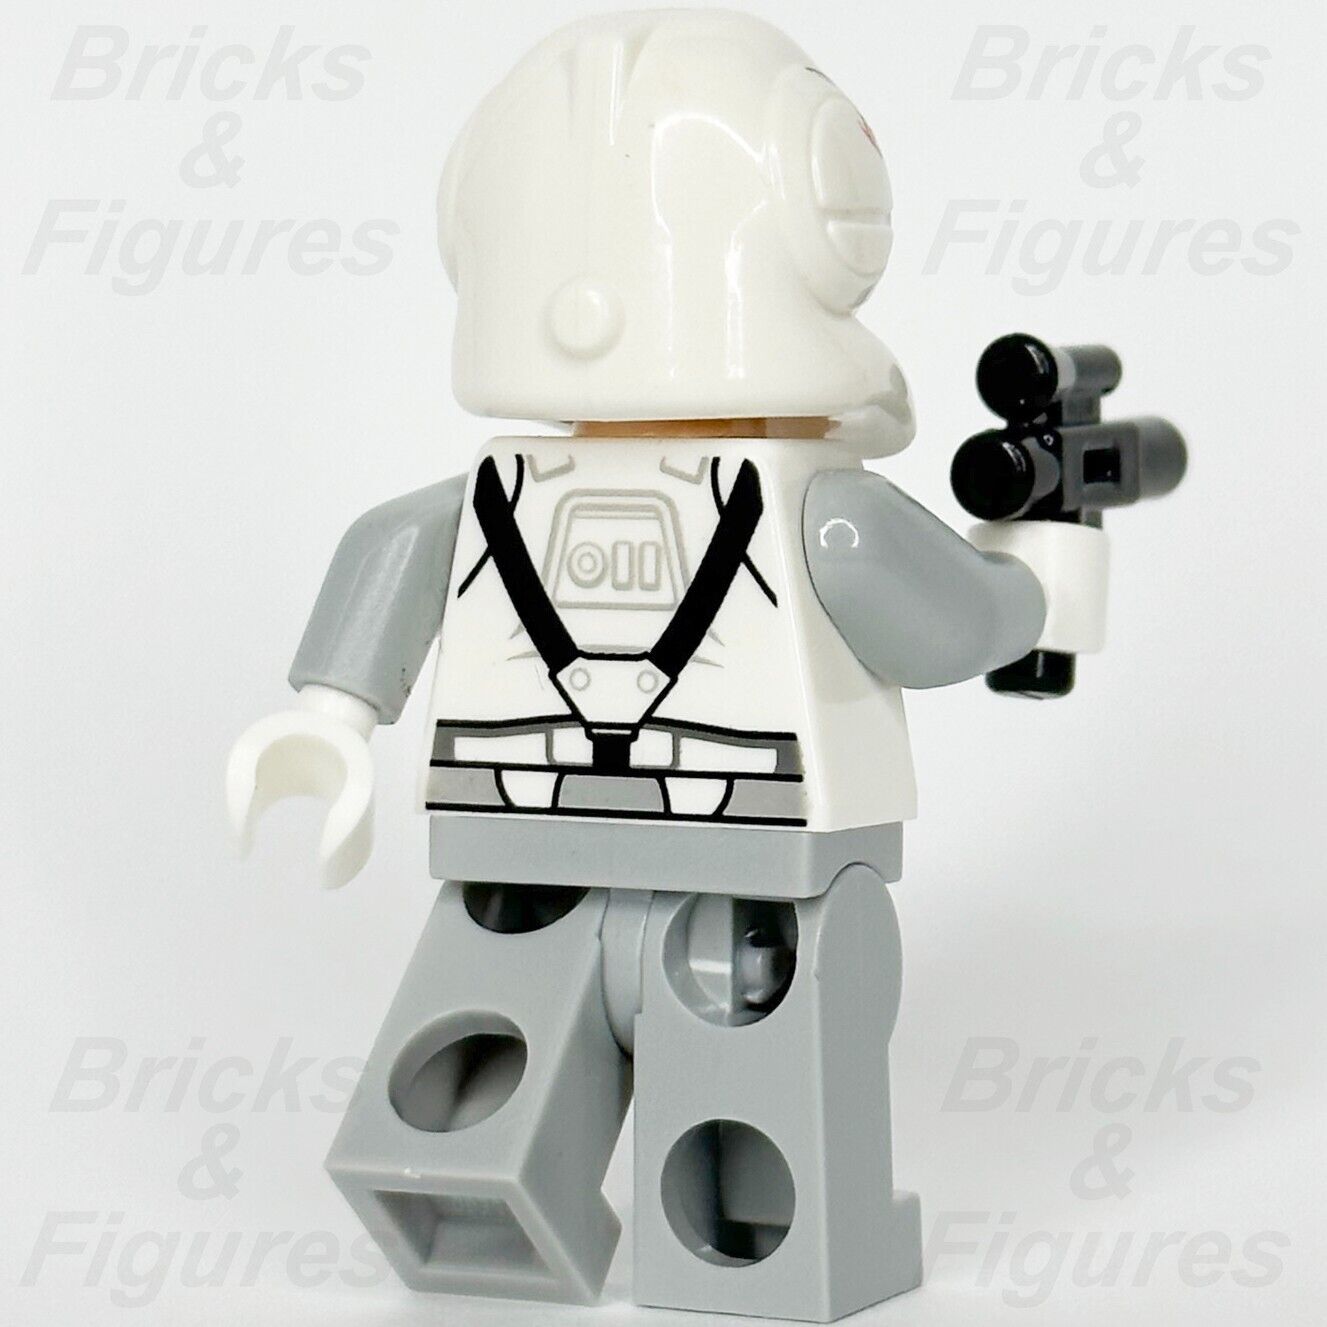 LEGO Star Wars Clone Trooper Pilot Minifigure Republic Phase 2 75072 sw0608 3